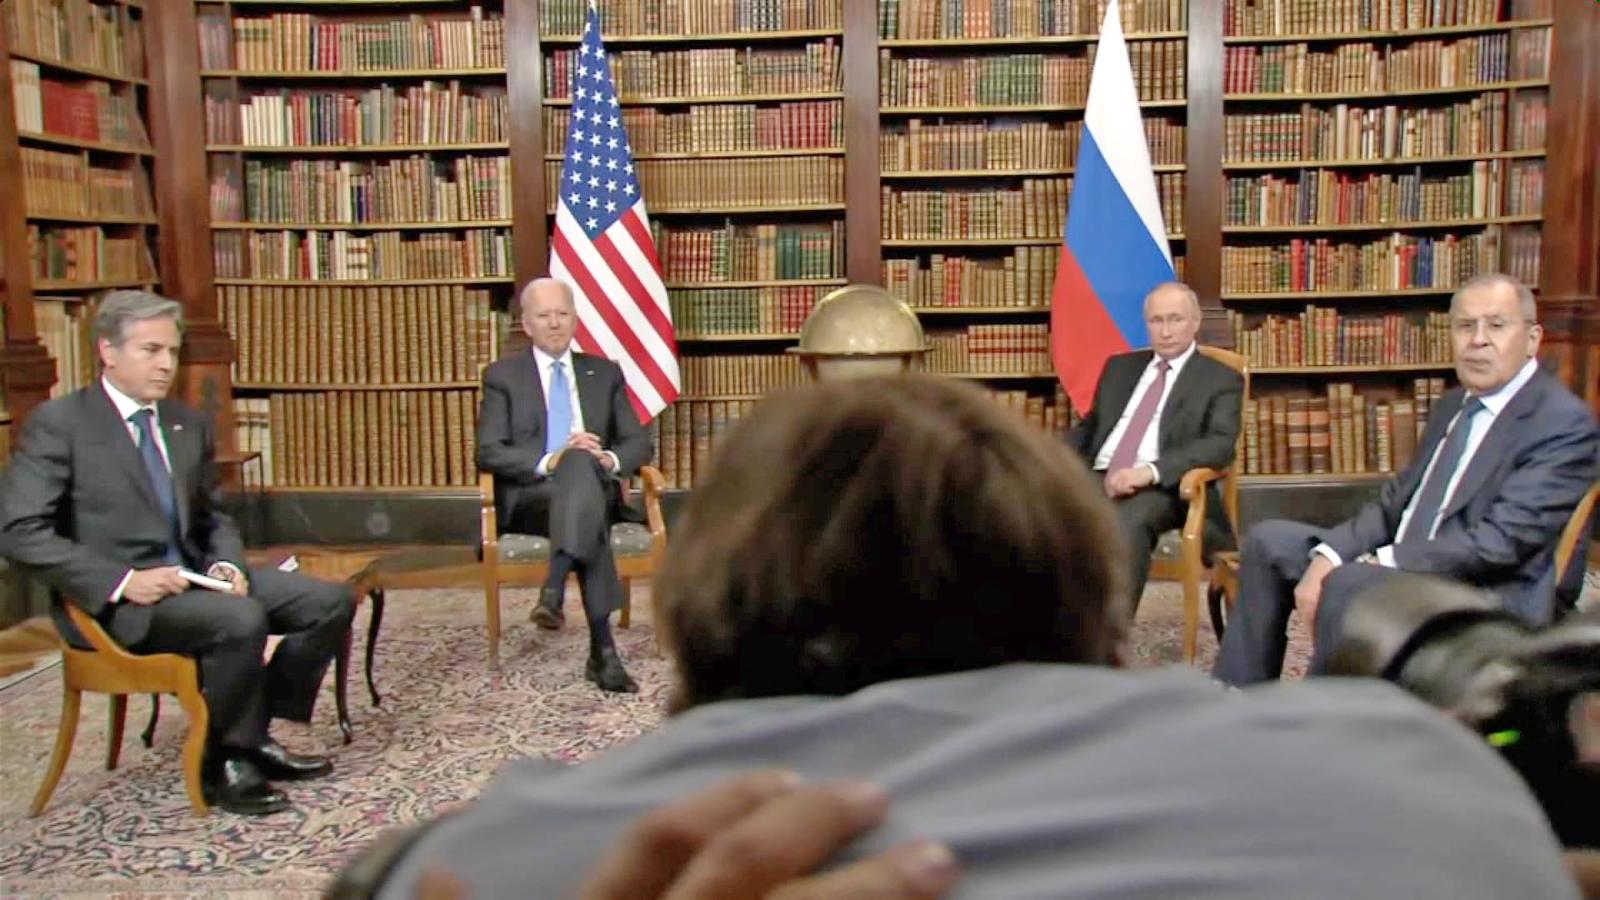 Joe Biden and Vladimir Putin speak amid tensions in Ukraine